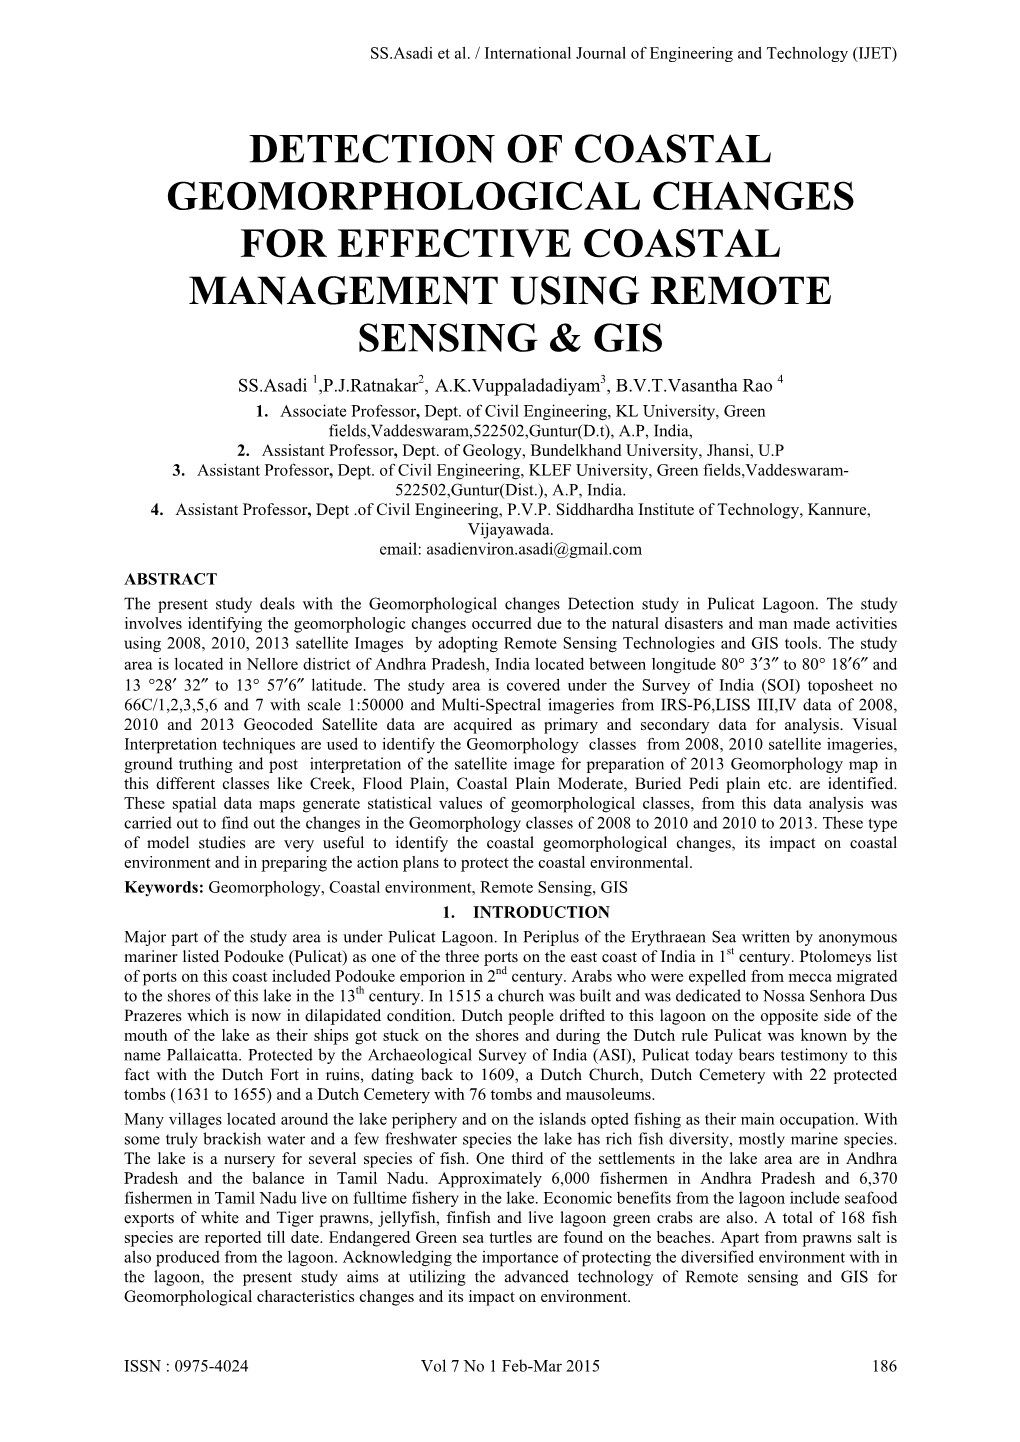 Detection of Coastal Geomorphological Changes